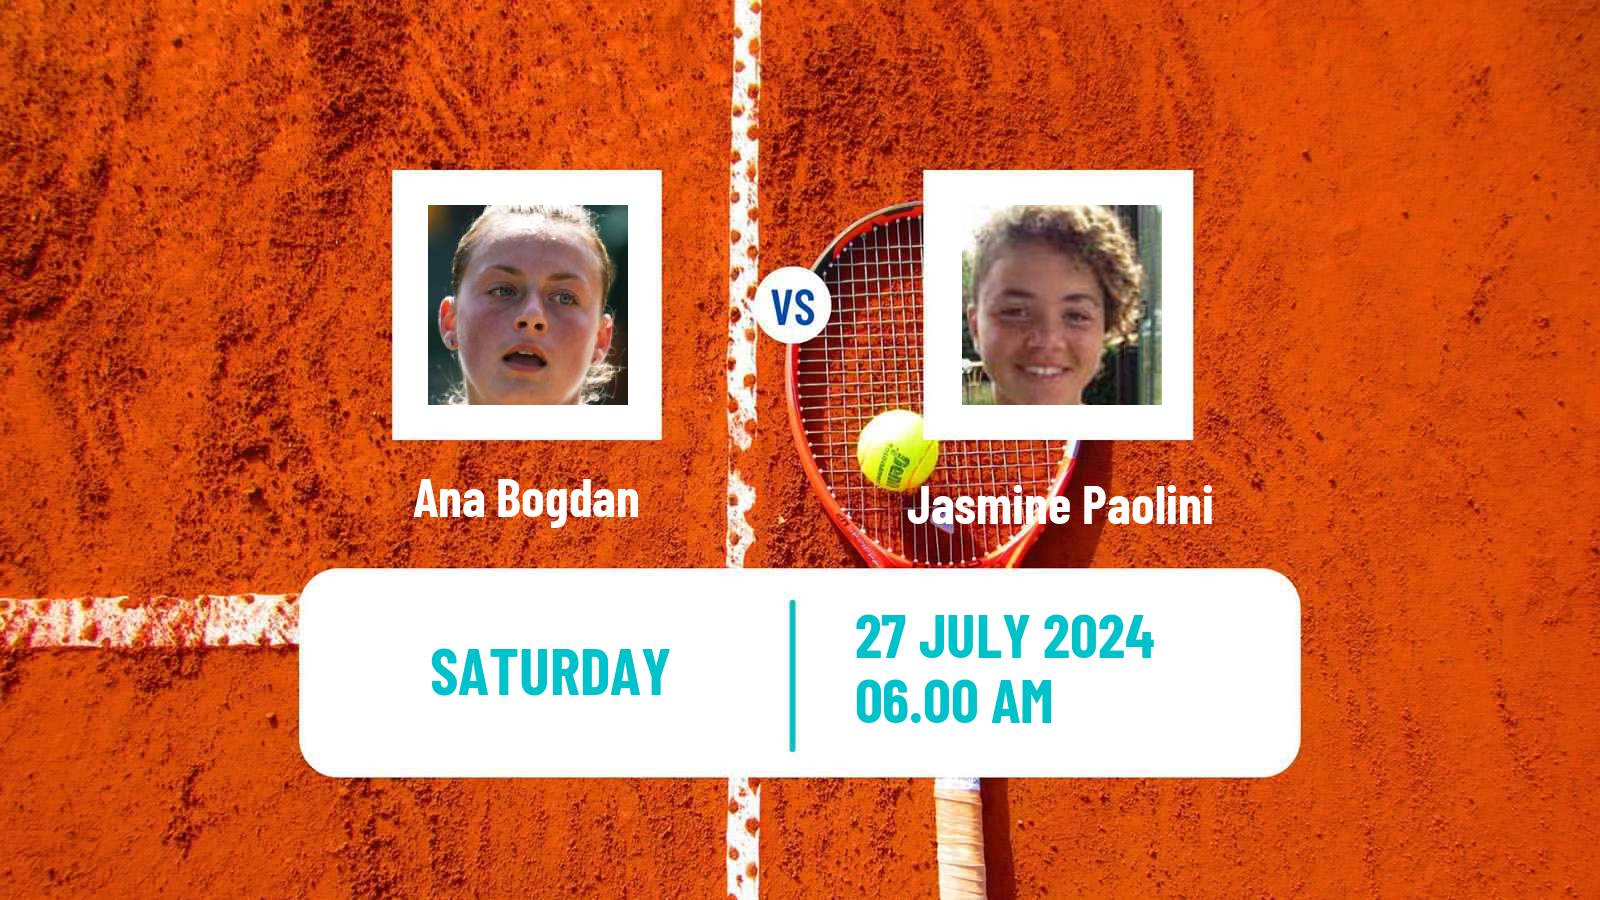 Tennis WTA Olympic Games Ana Bogdan - Jasmine Paolini